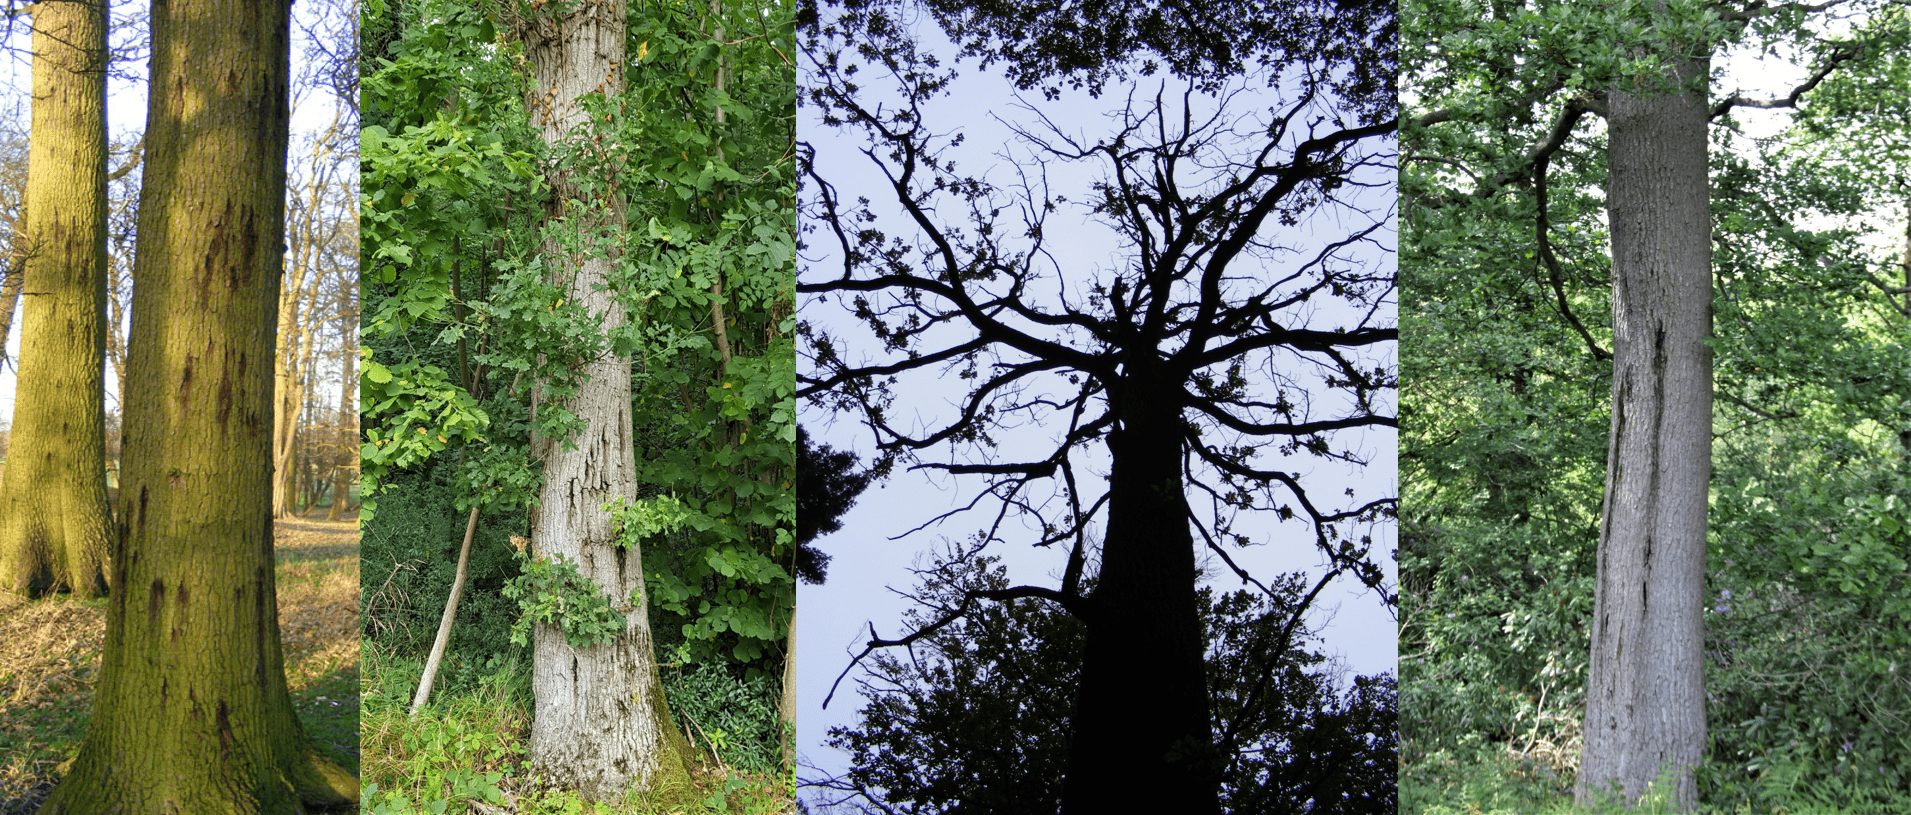 A montage of images illustrating stem bleeds and crown dieback associated with acute oak dieback (AOD).